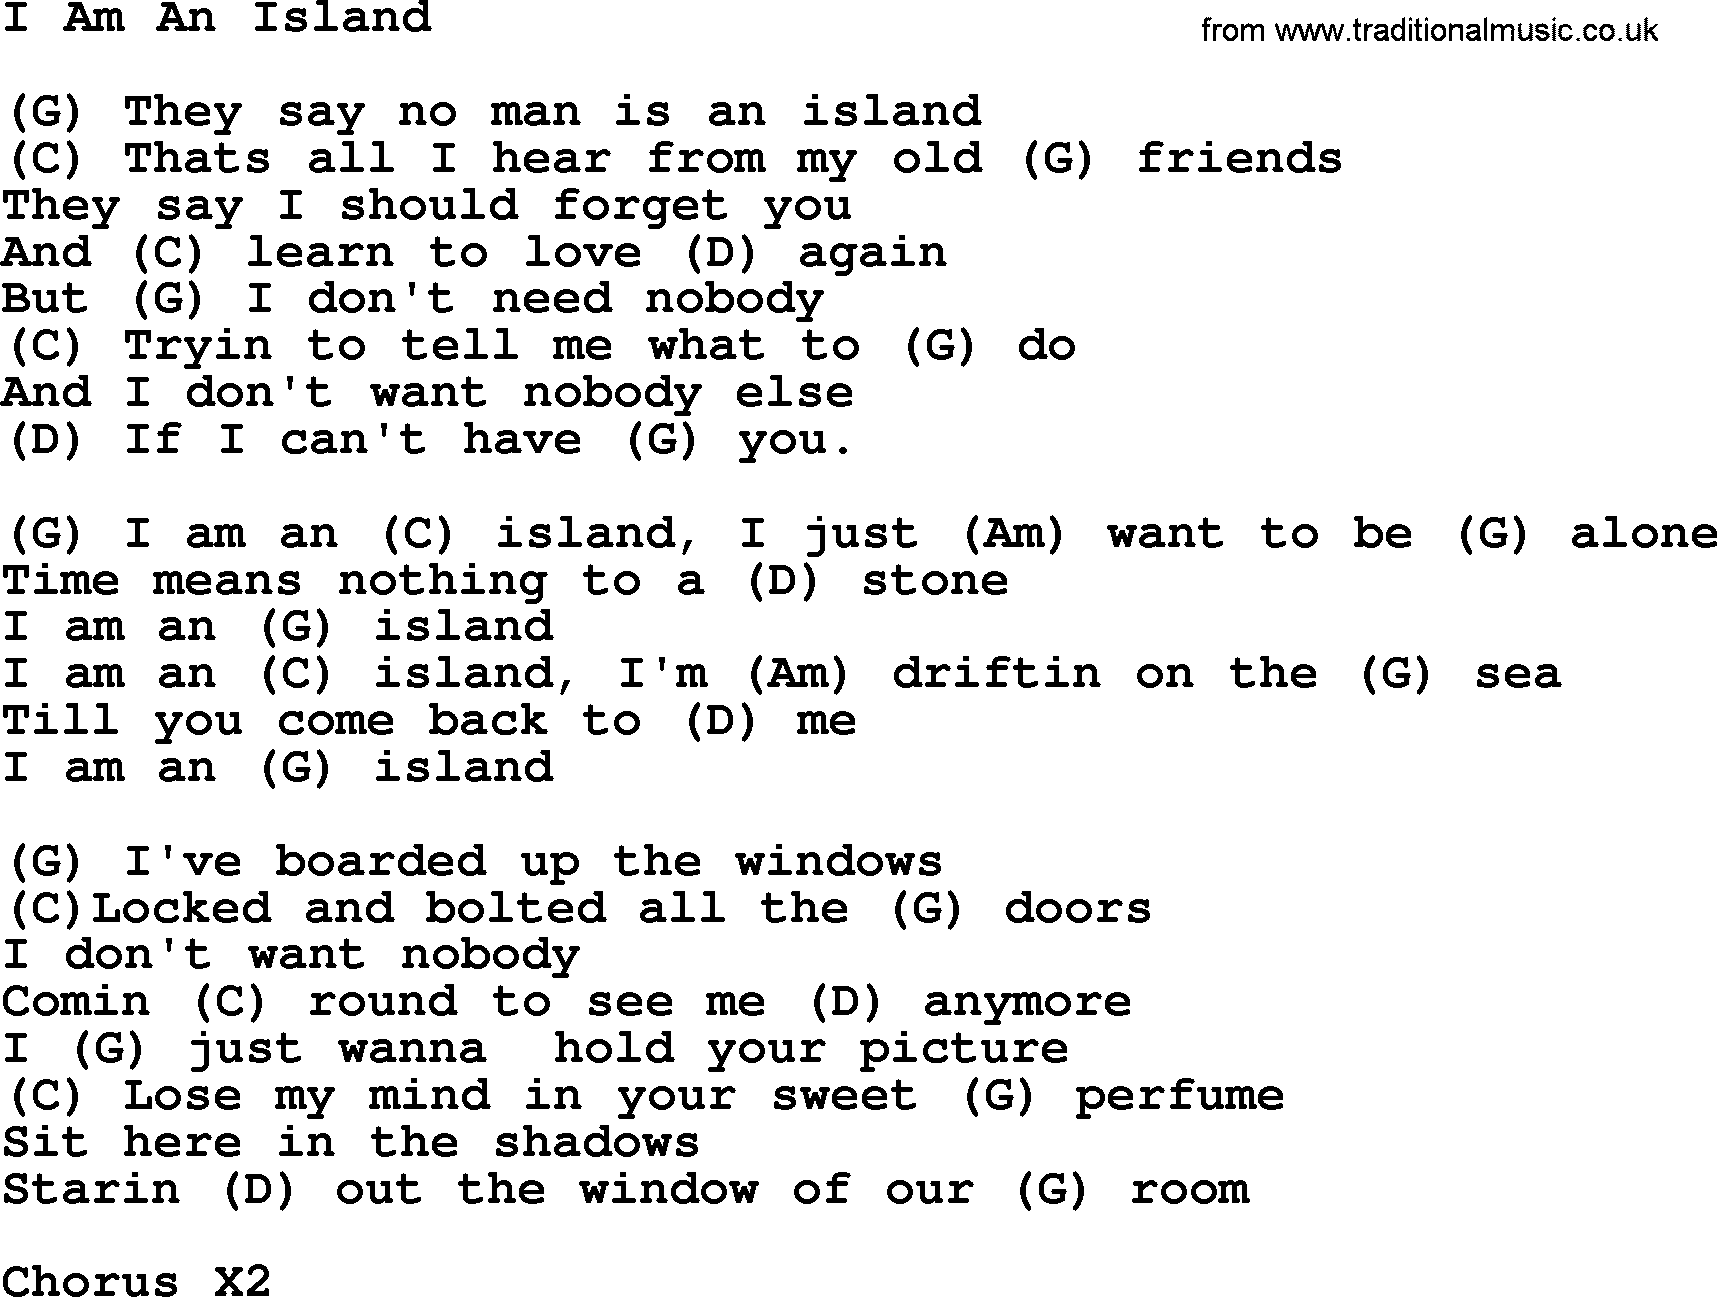 Merle Haggard song: I Am An Island, lyrics and chords